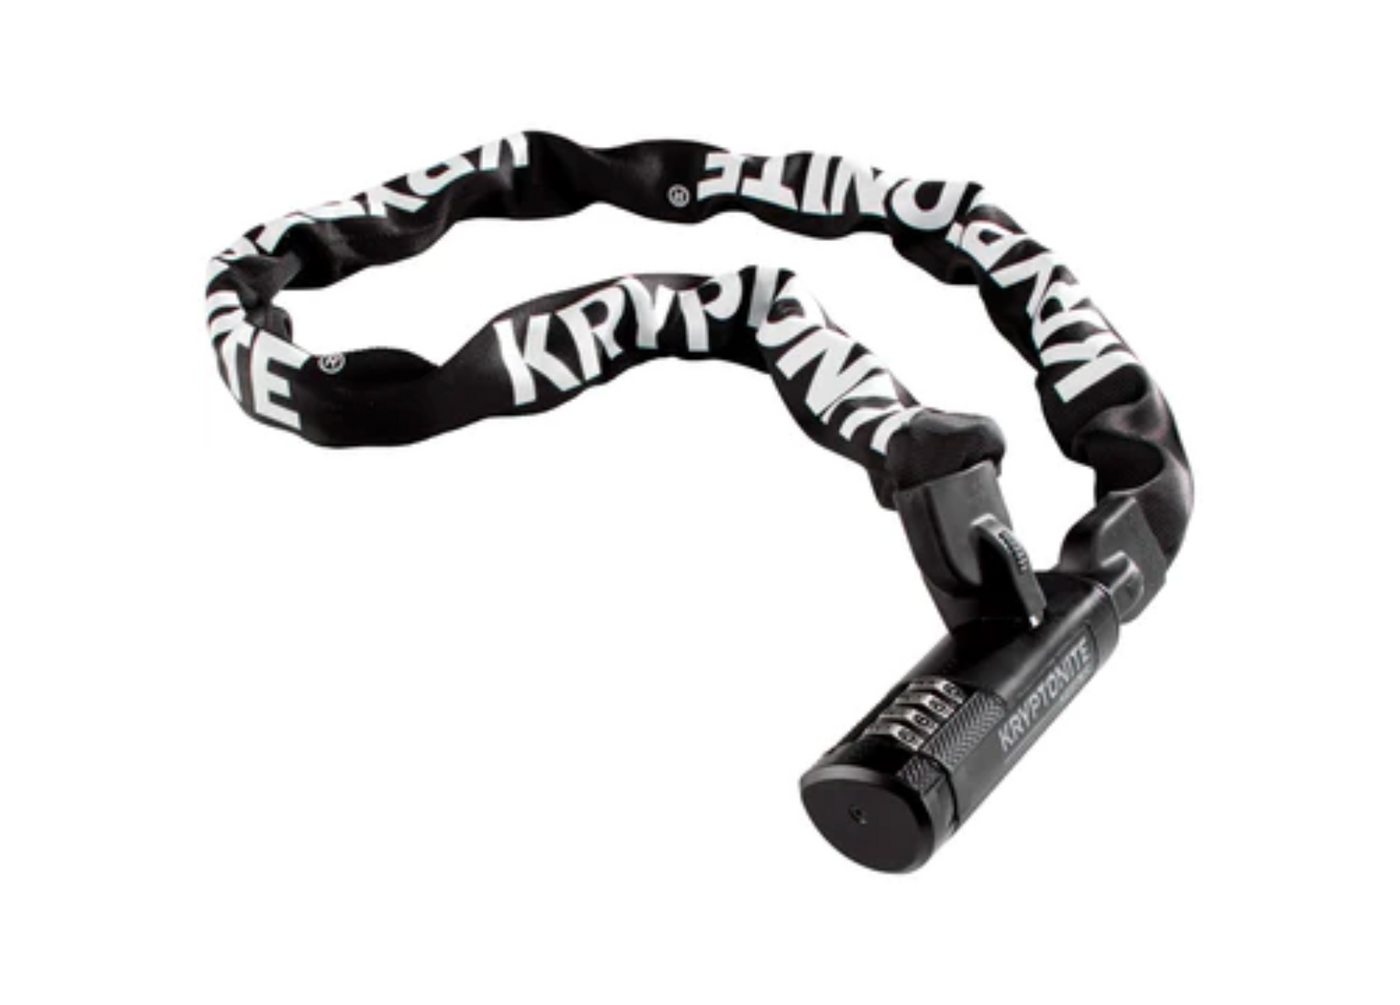 Kryptonite Keeper 712 Chain Lock Combo